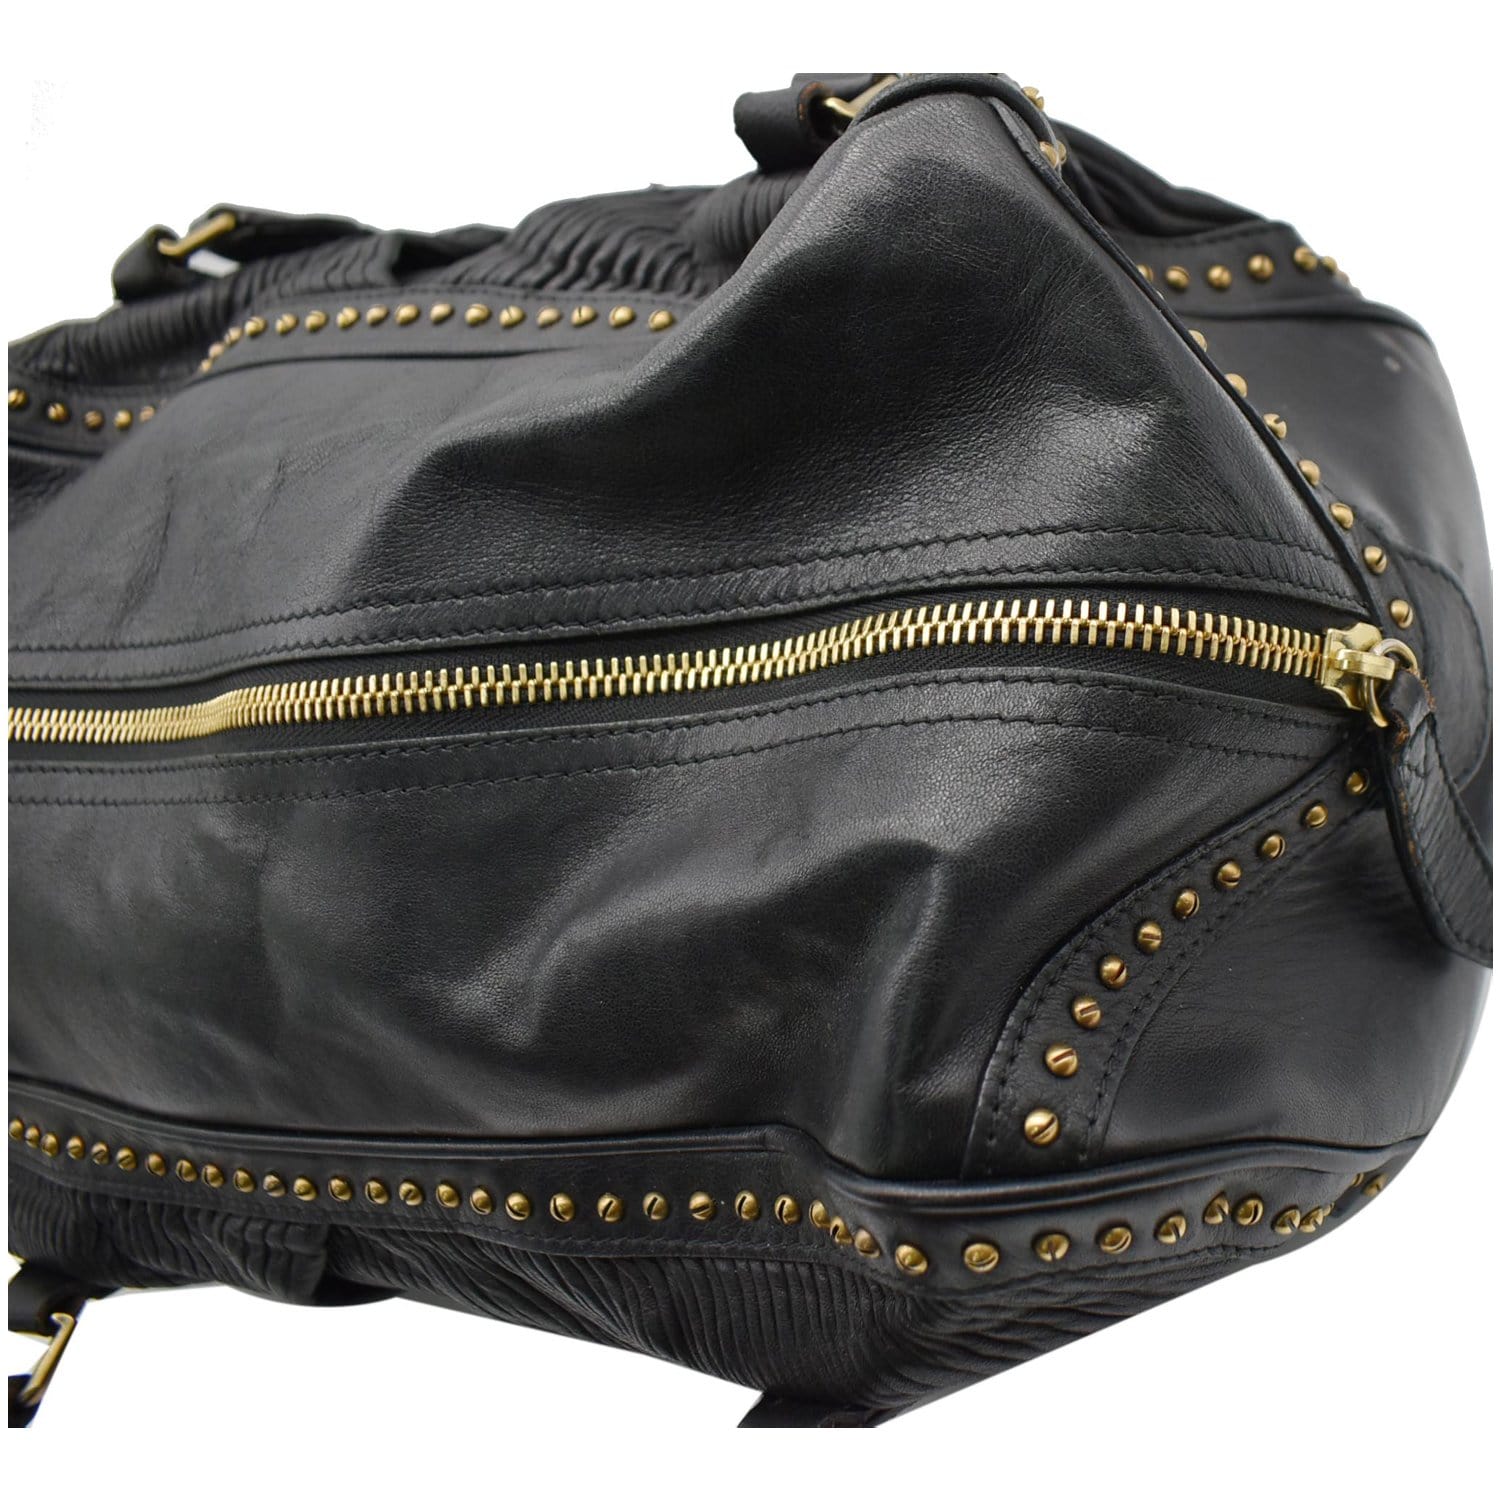 Studded Leather Bag 